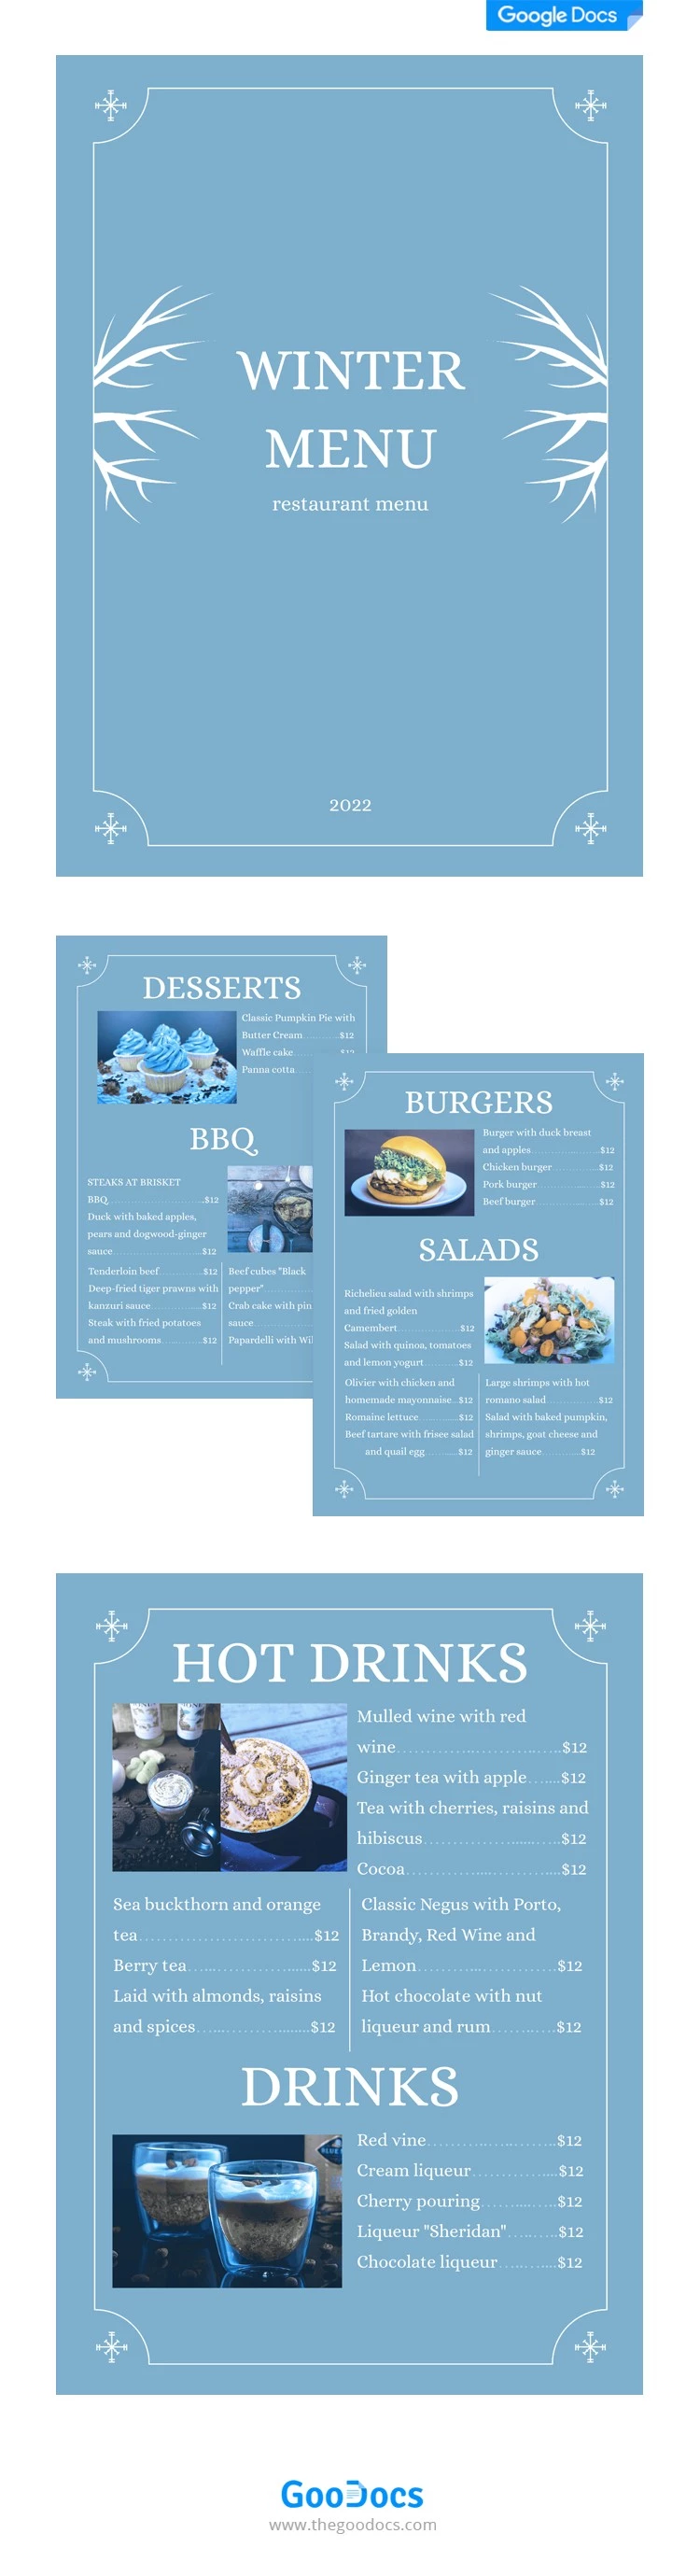 冬季餐厅菜单 - free Google Docs Template - 10062074